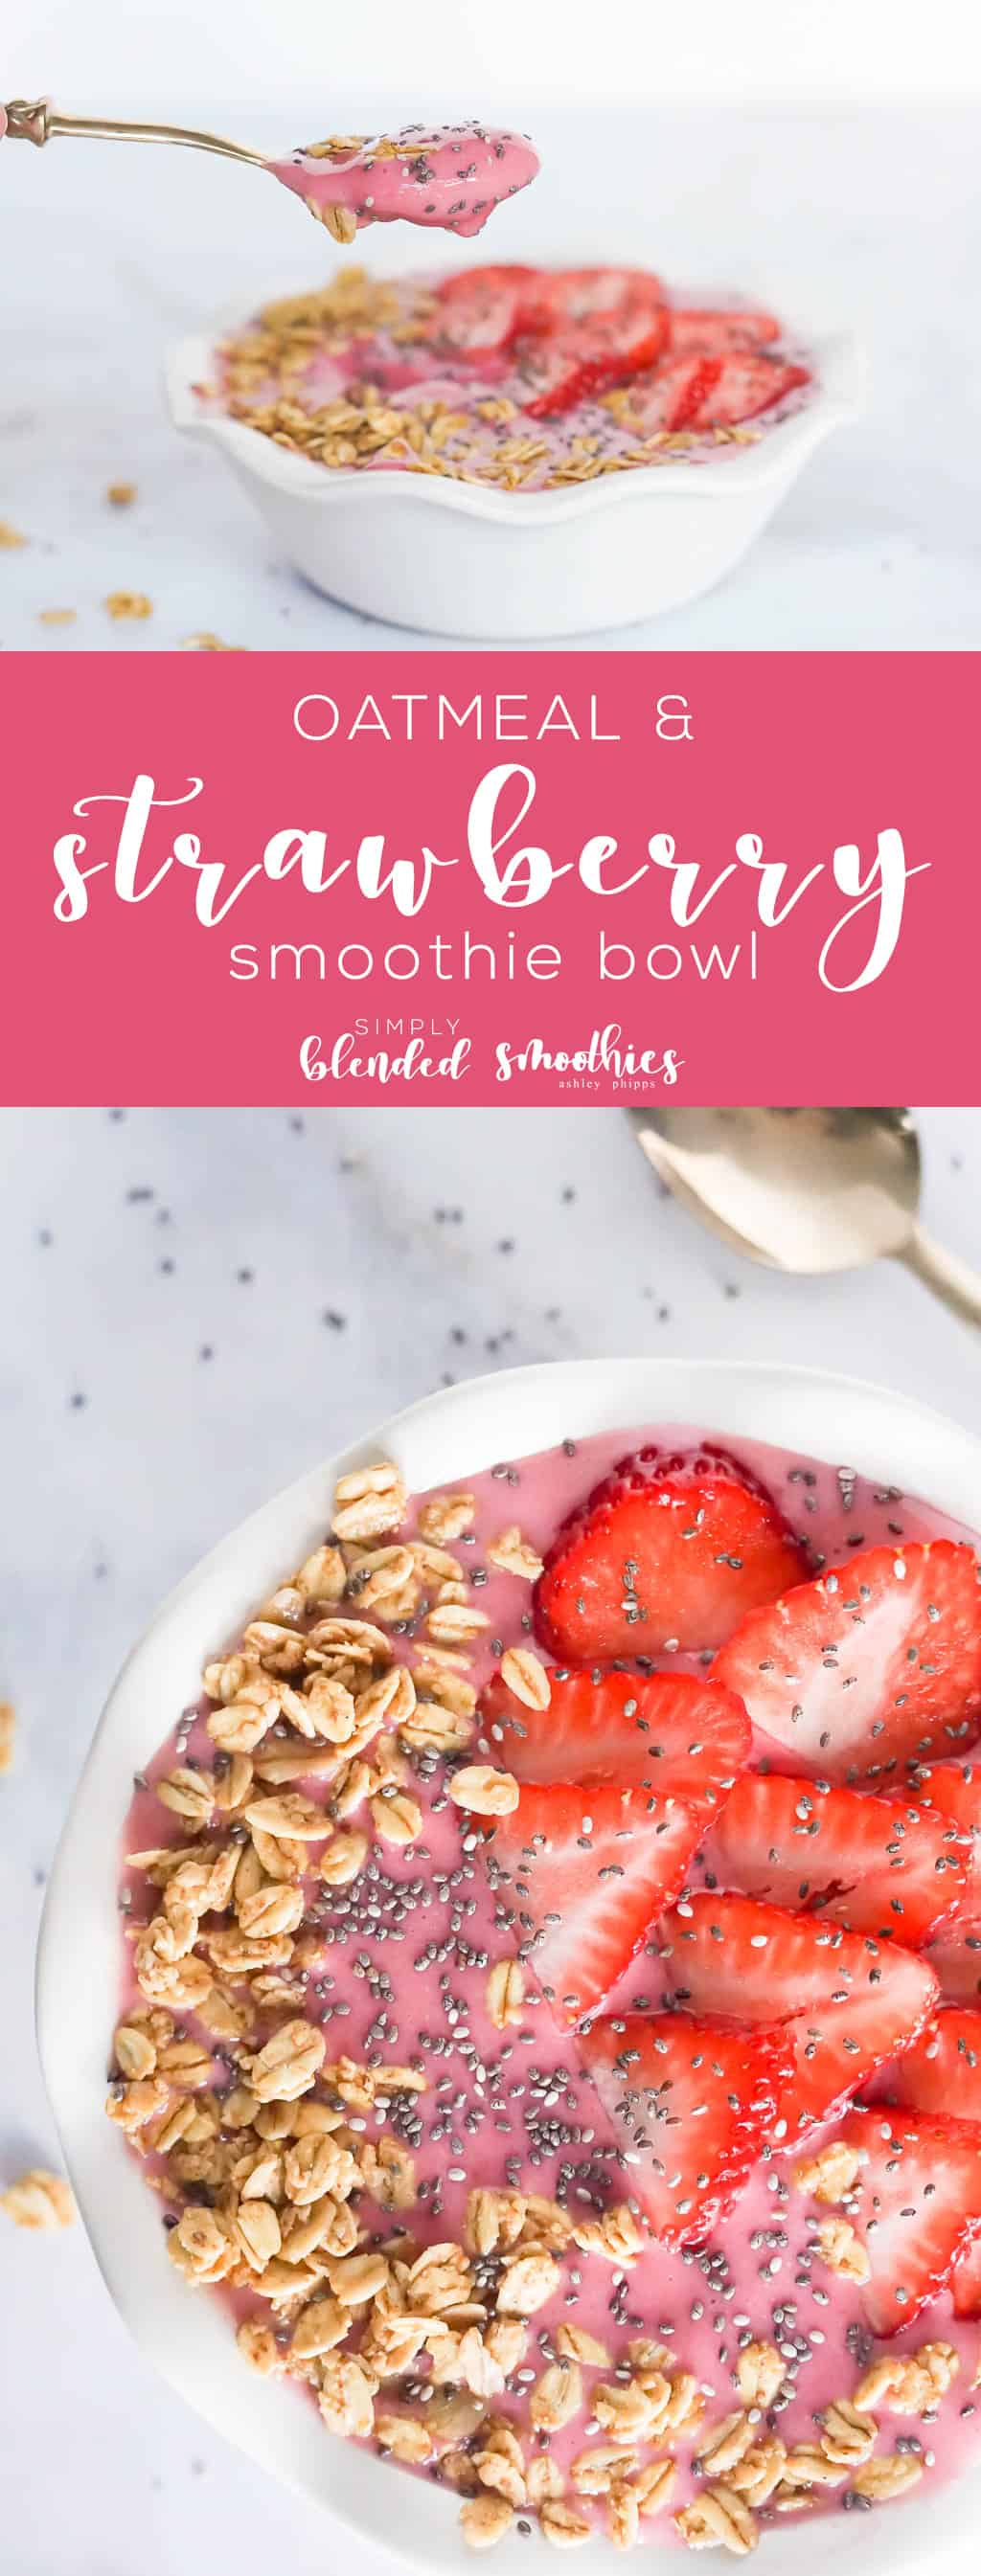 Easy Strawberry Oatmeal Smoothie Bowl - A Delicious Smoothie Bowl Recipe